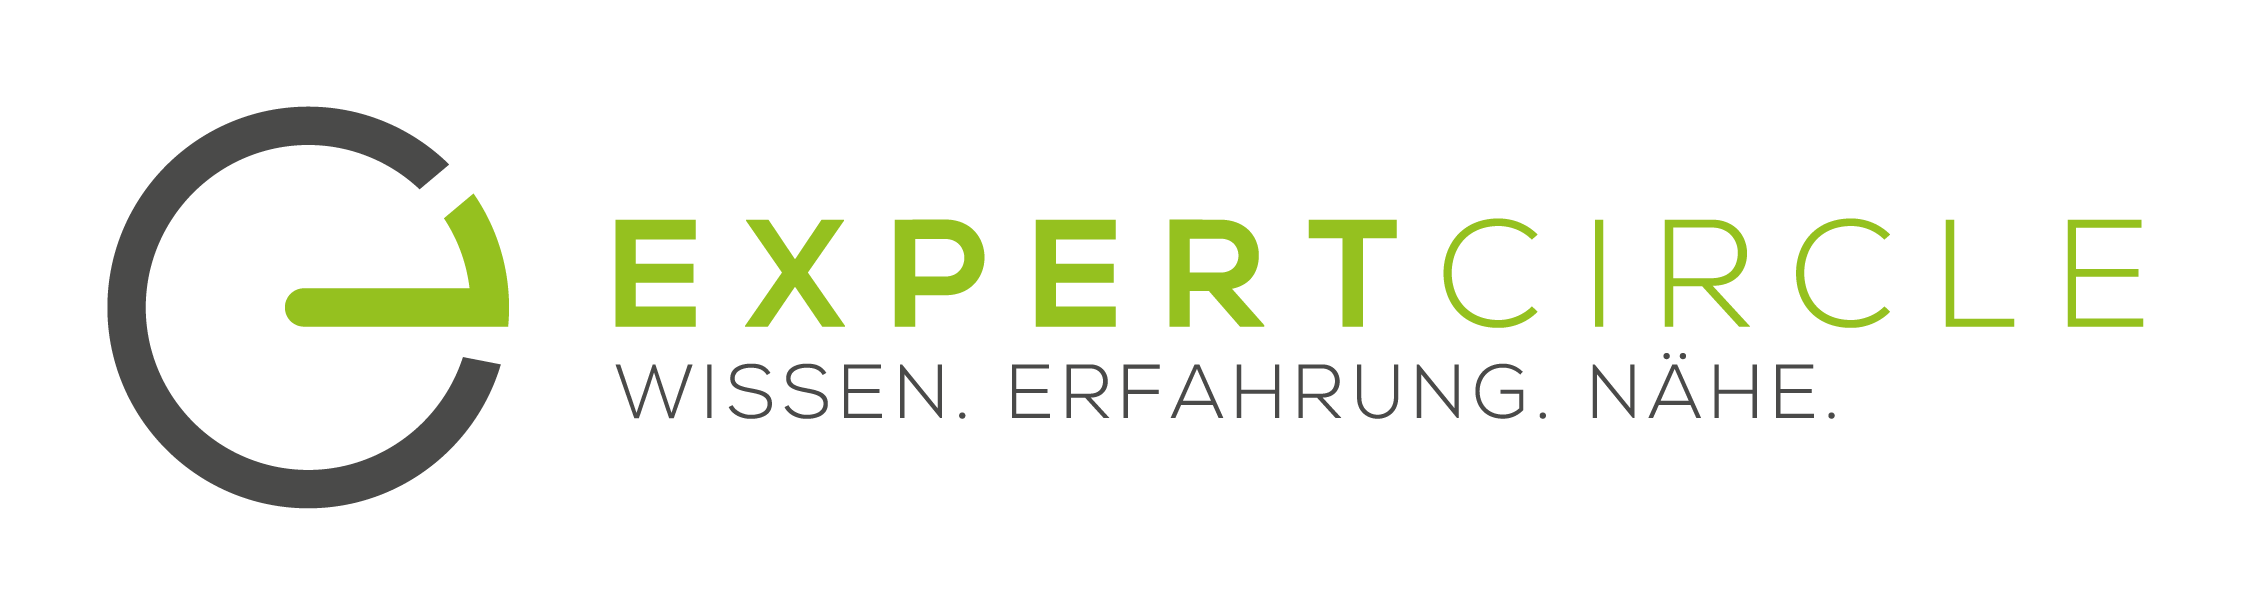 EXPERTCIRCLE GmbH